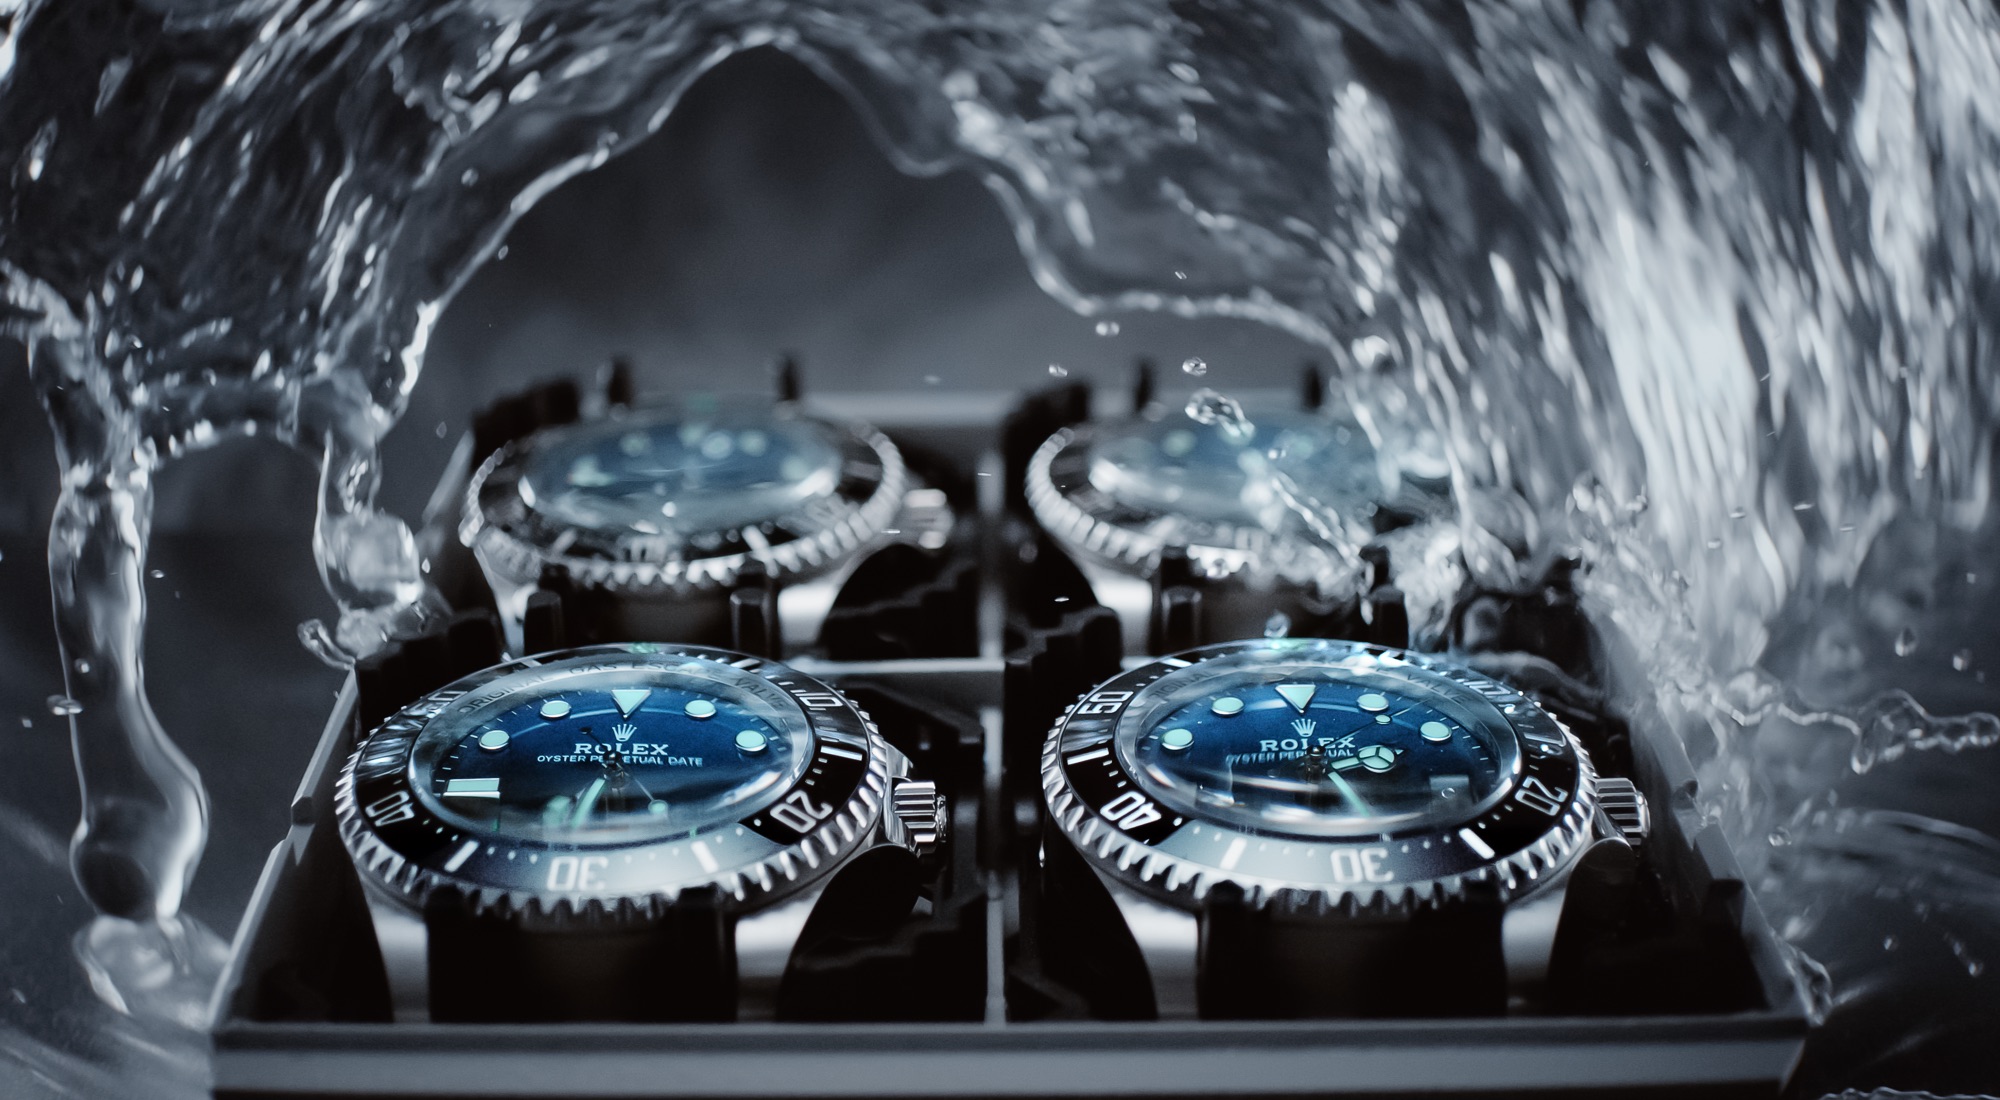 Rolex Deepsea watches